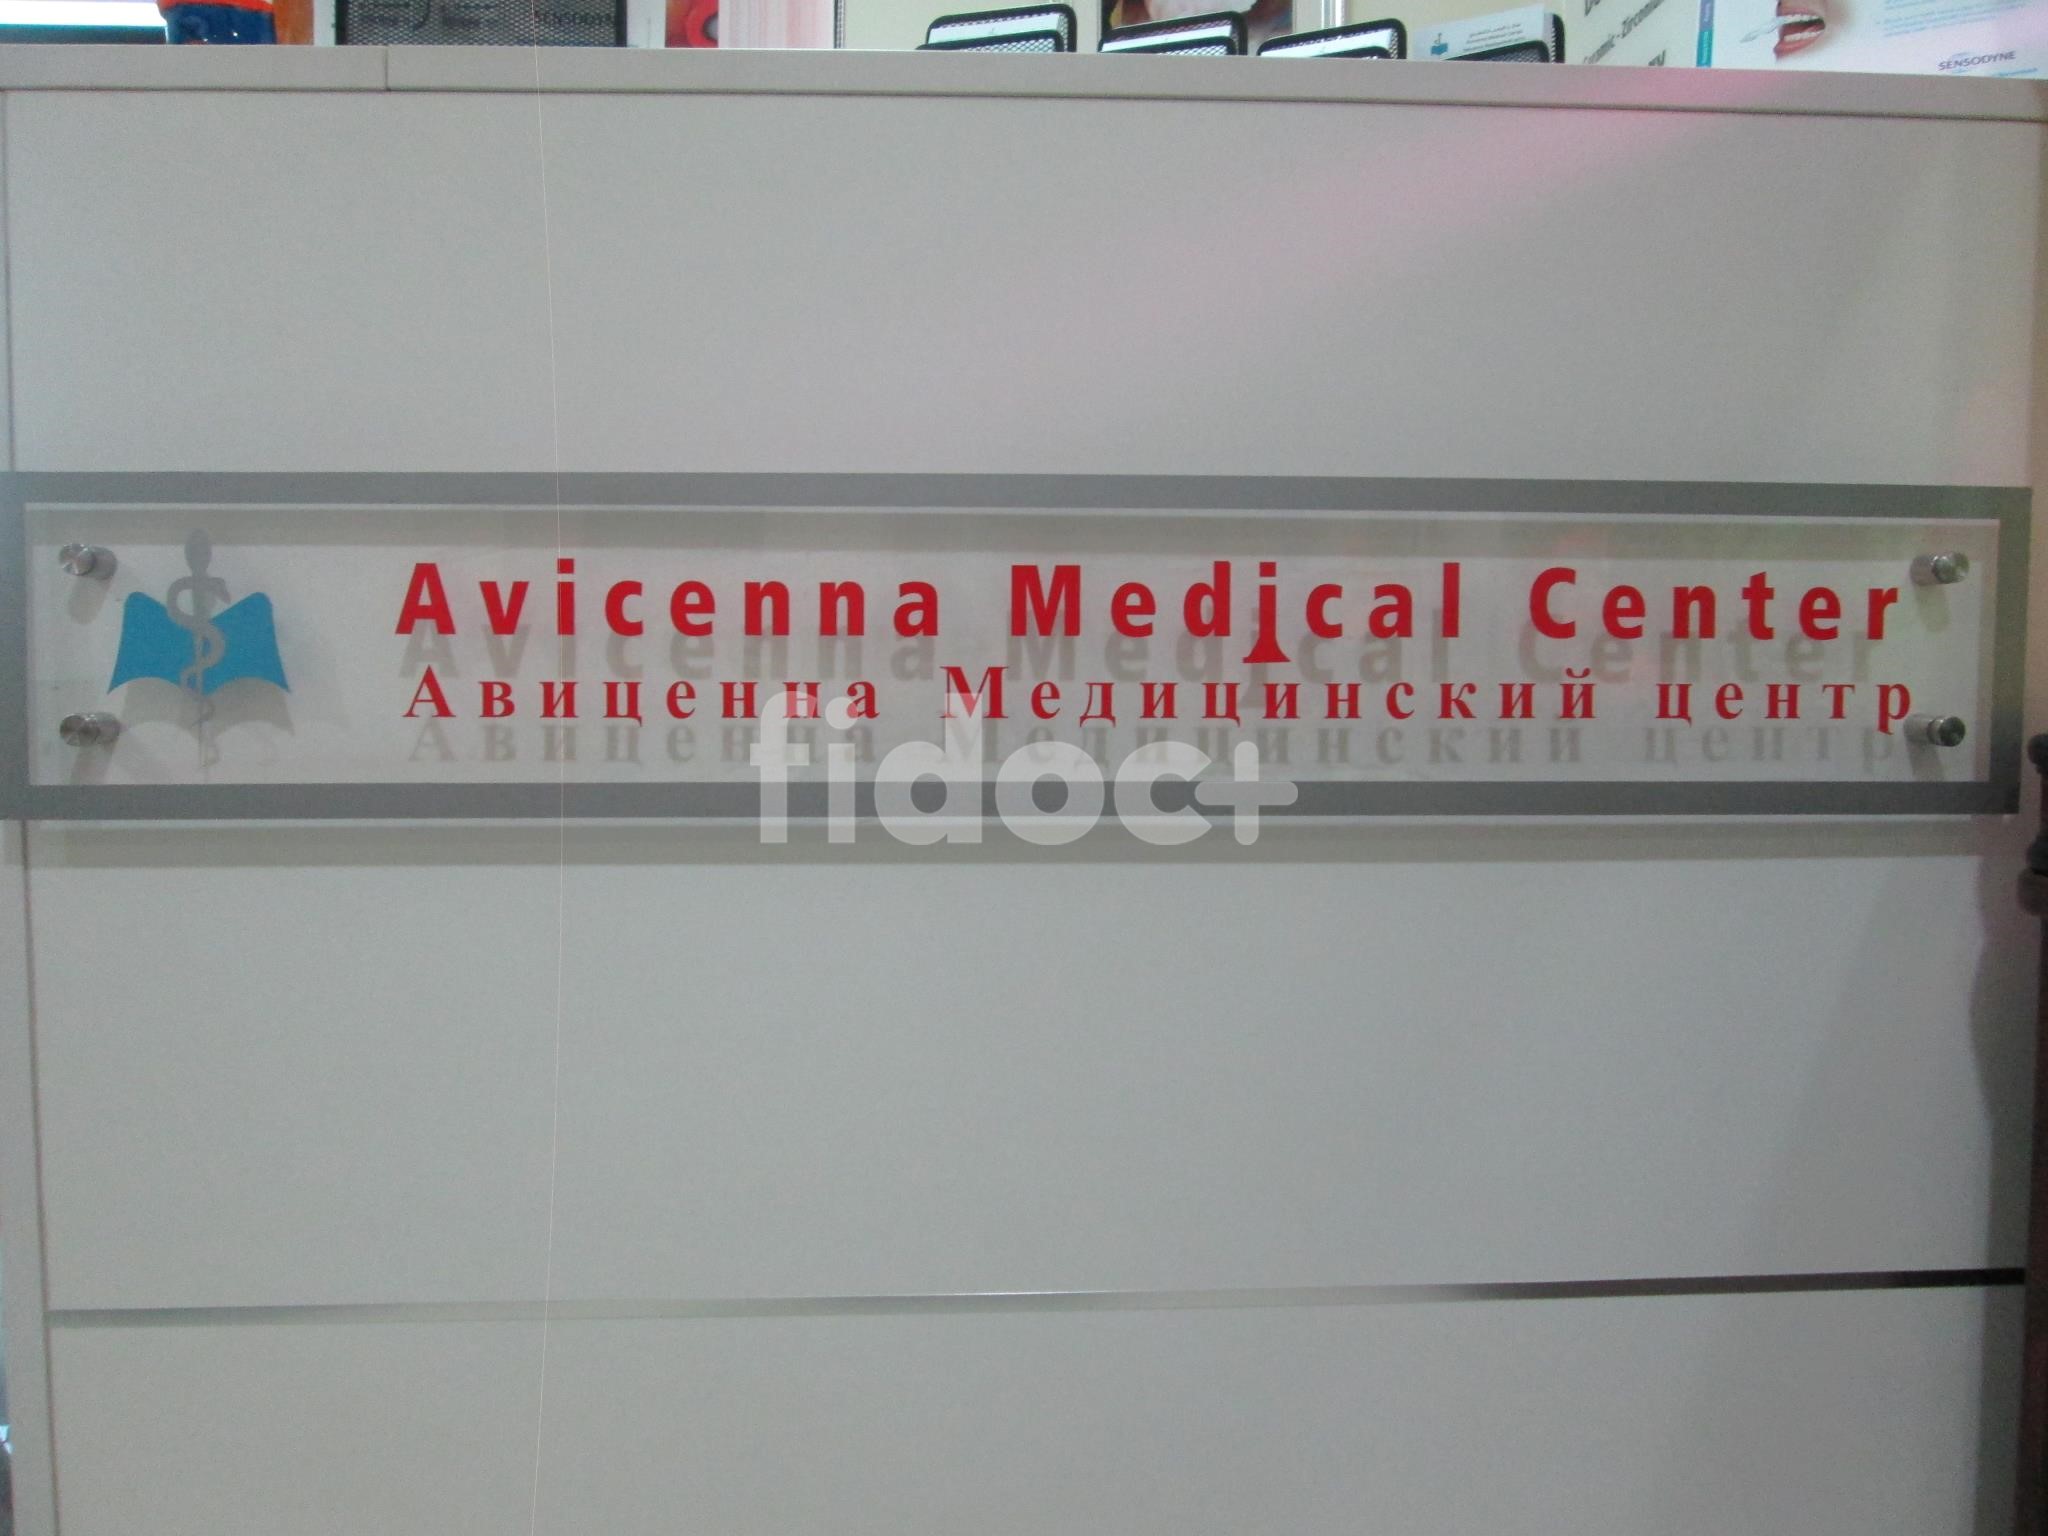 Avicenna Medical Center, Dubai